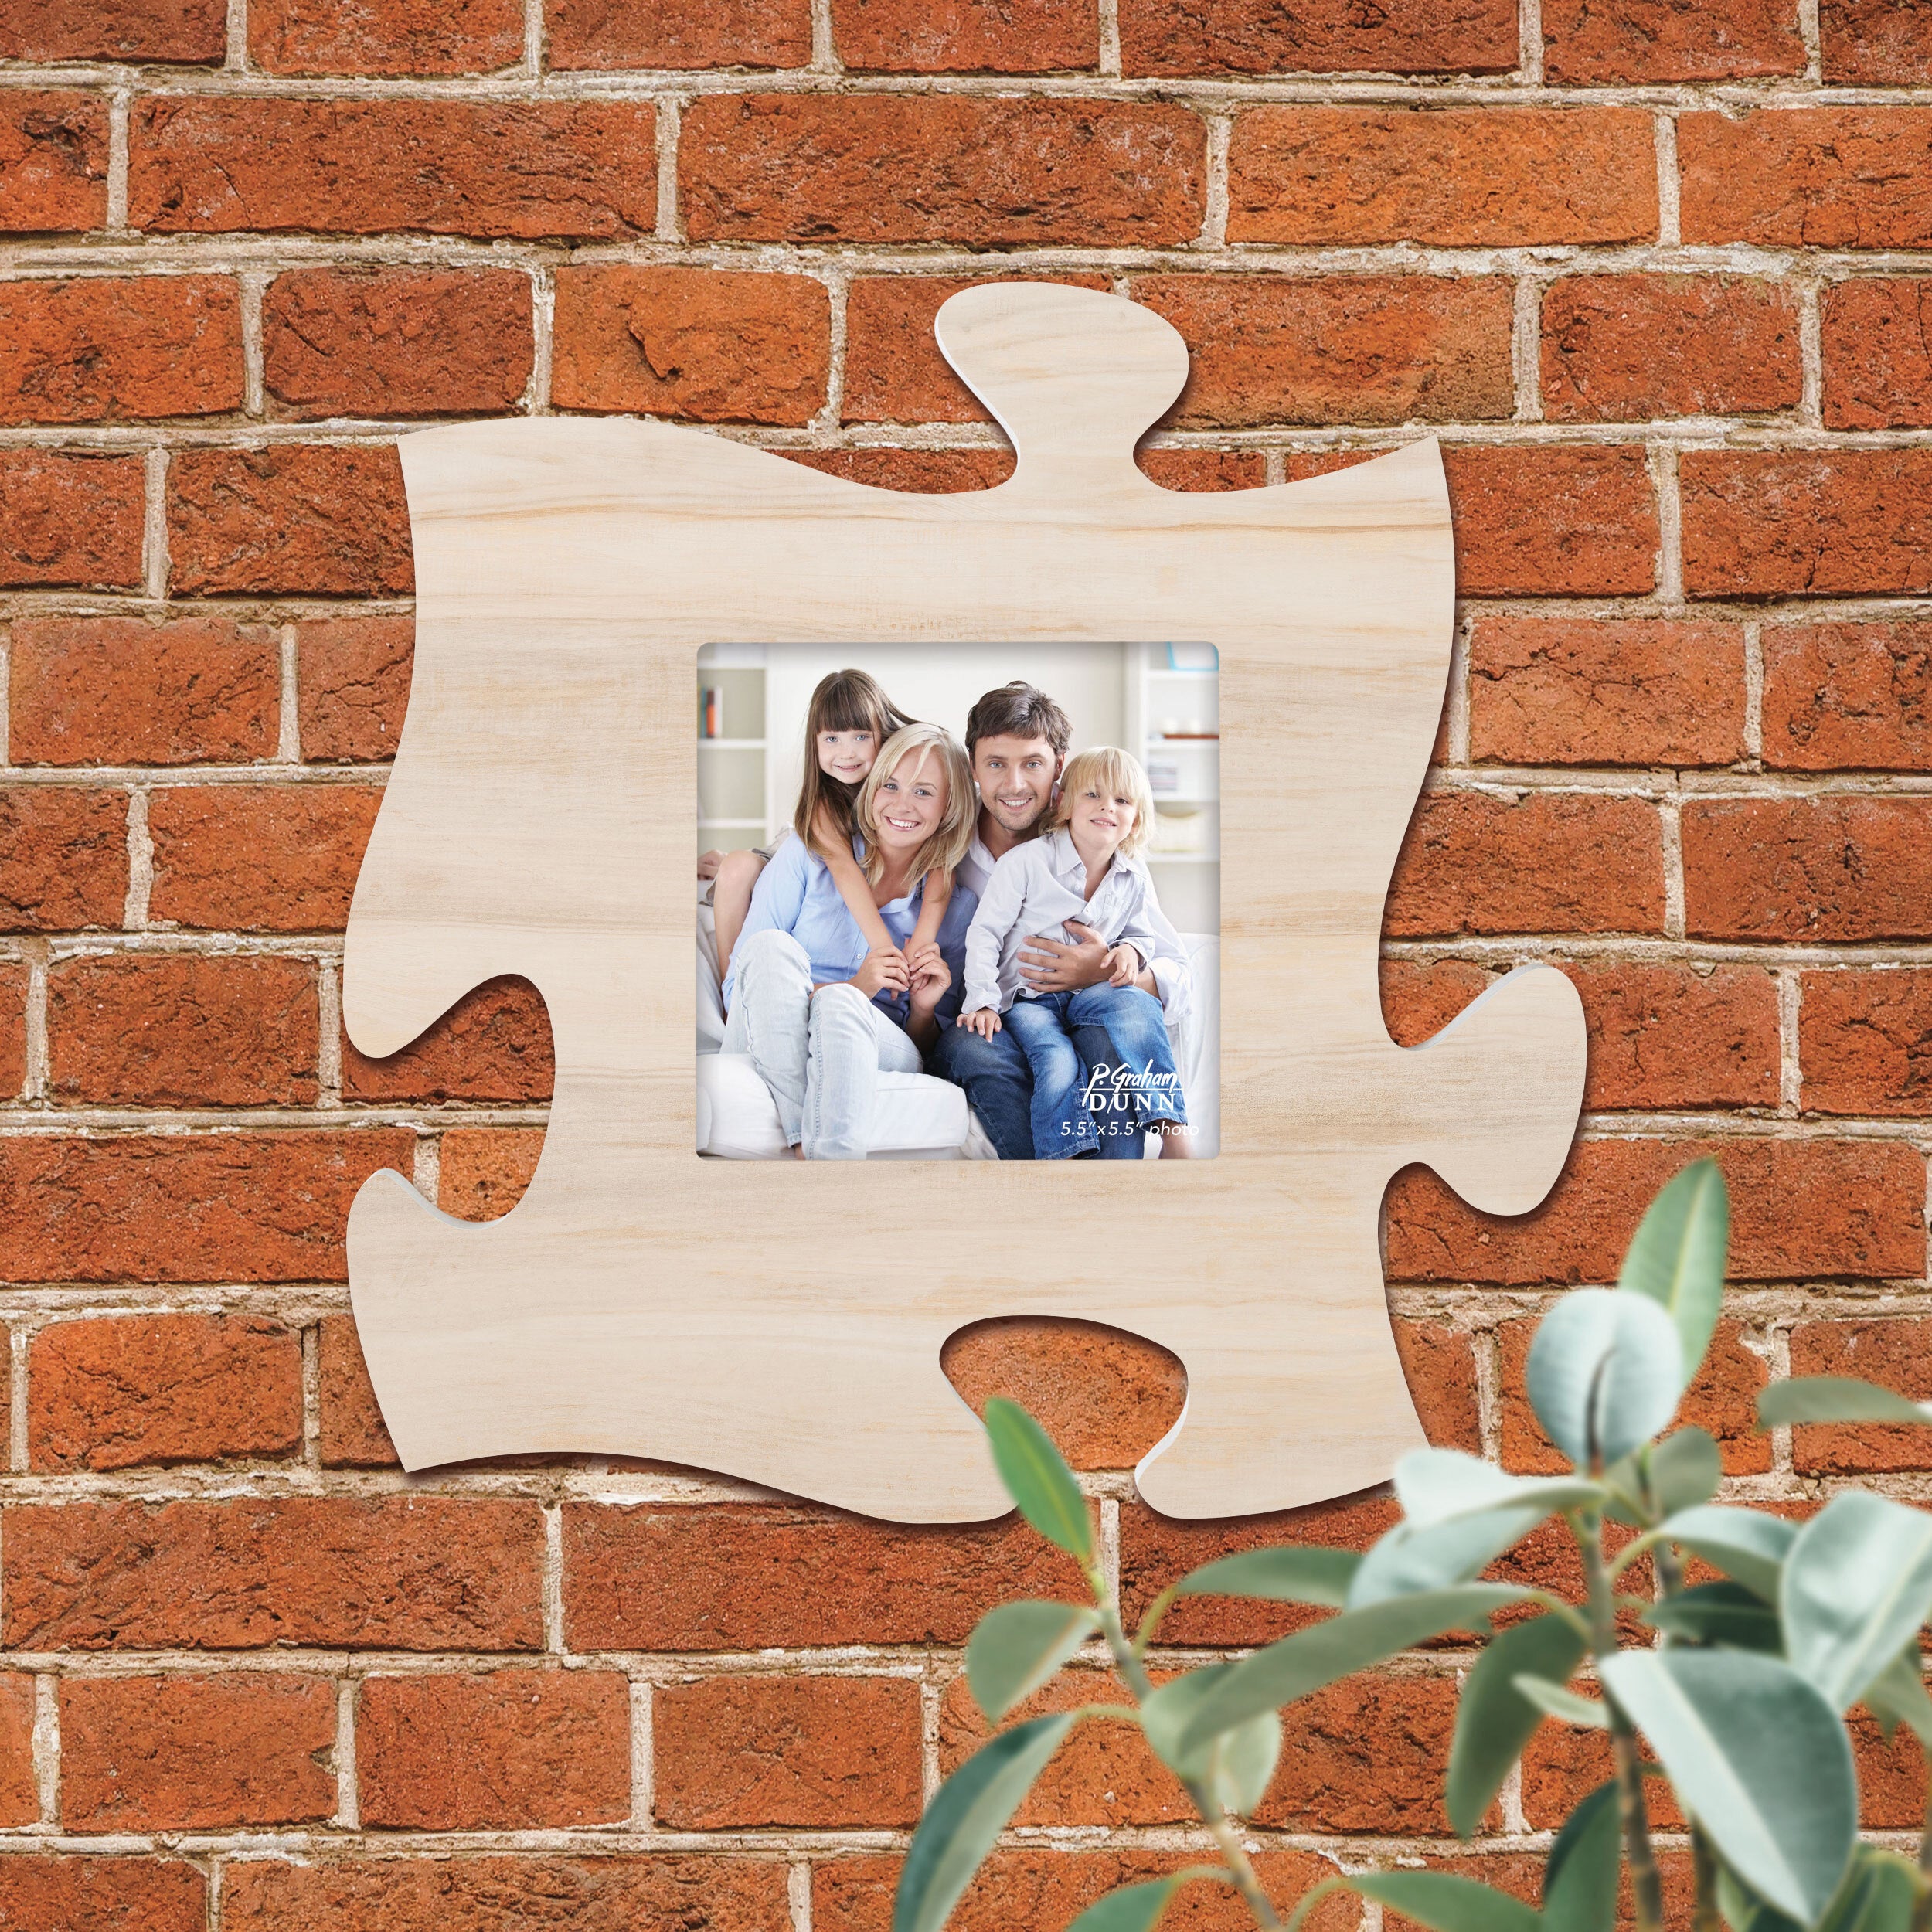 Tan Woodgrain Background Puzzle Piece Photo Frame (5.5x5.5 Photo)